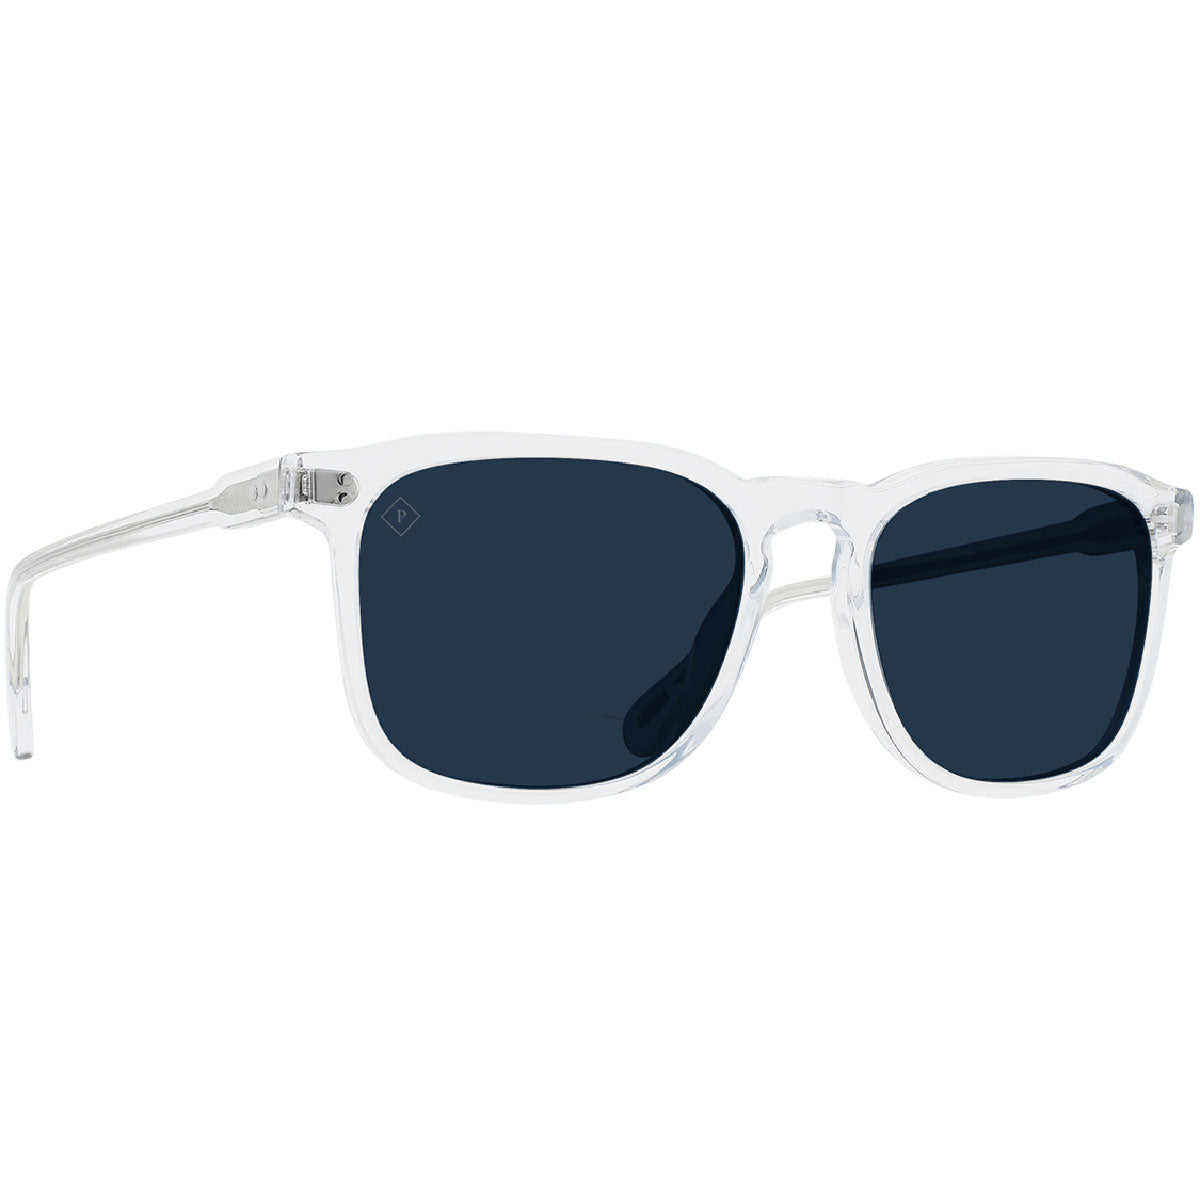 Raen Wiley 54 Sunglasses - Crystal Clear/Polarized Blue image 1